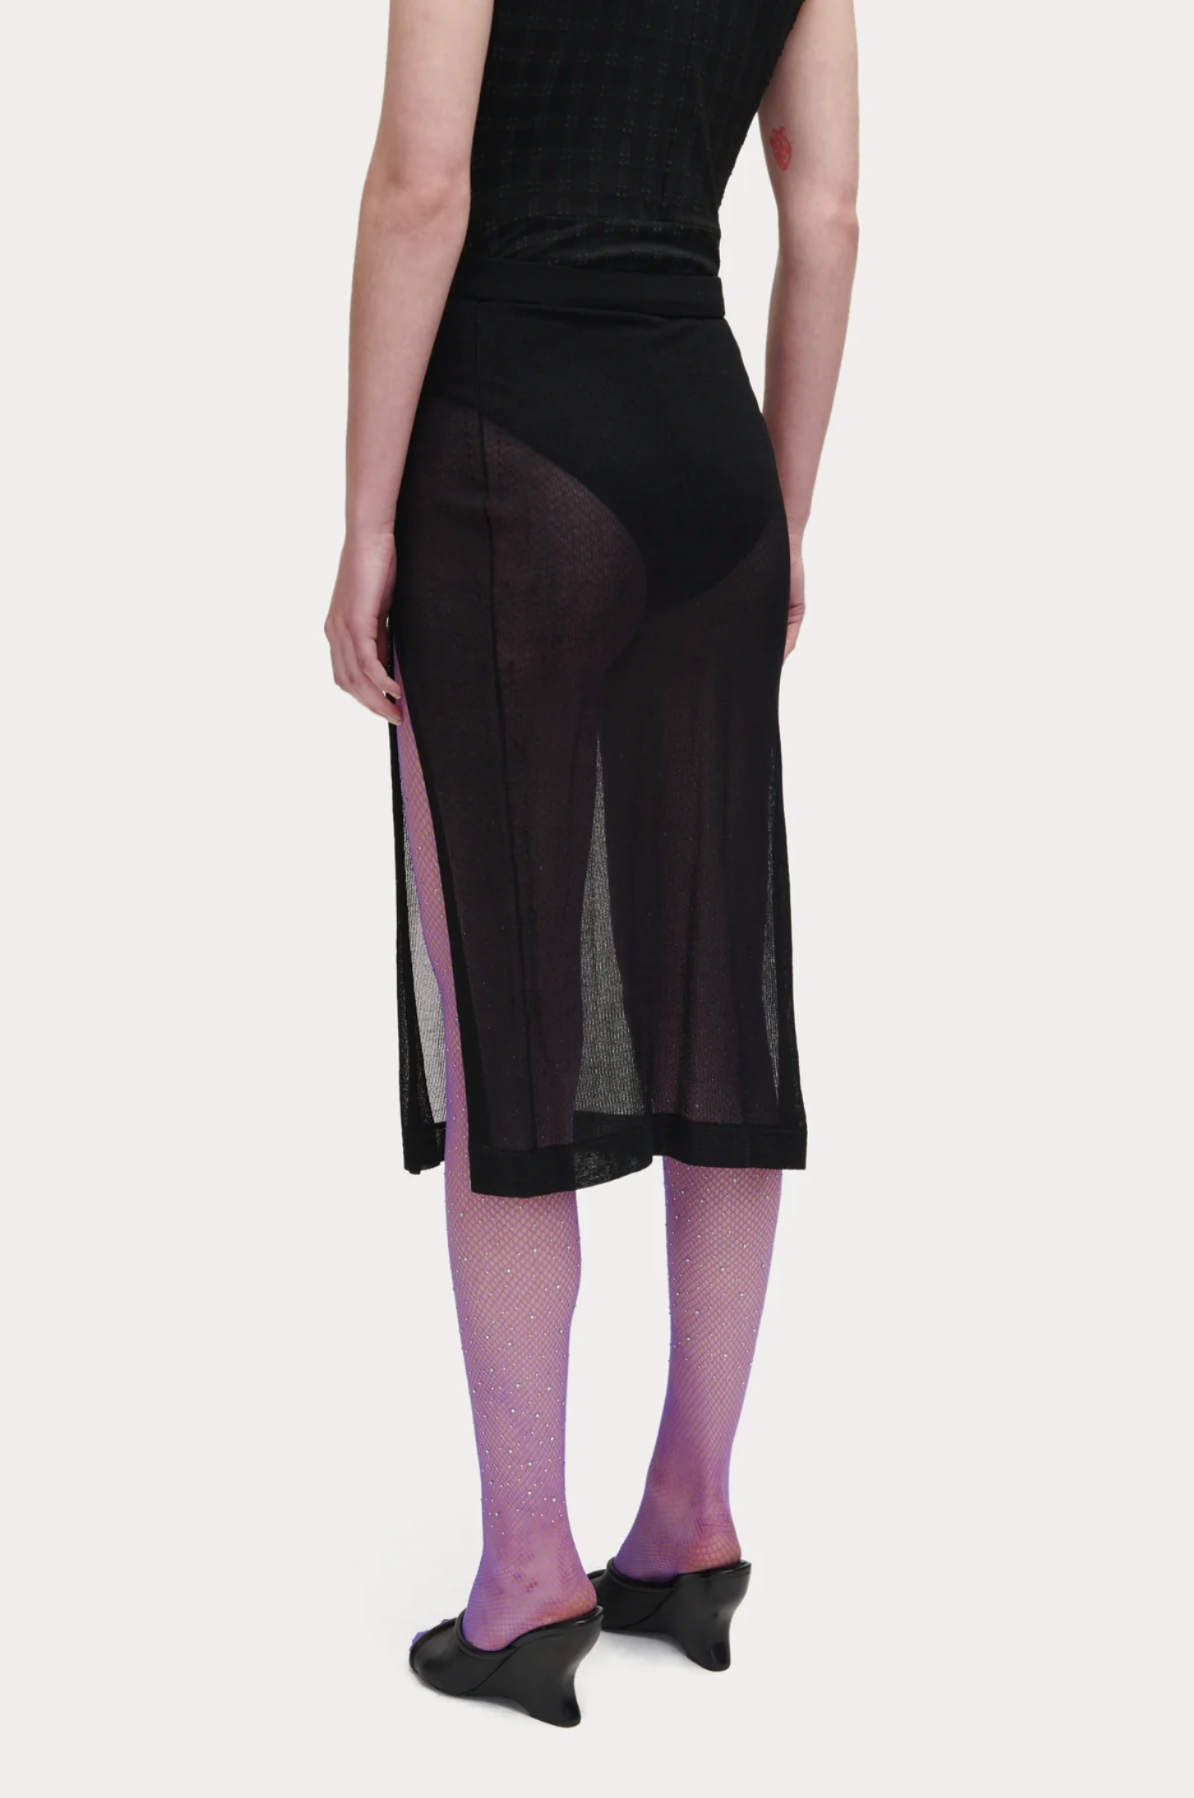 Abreu Skirt in Black Gauzy Knit by Rachel Comey